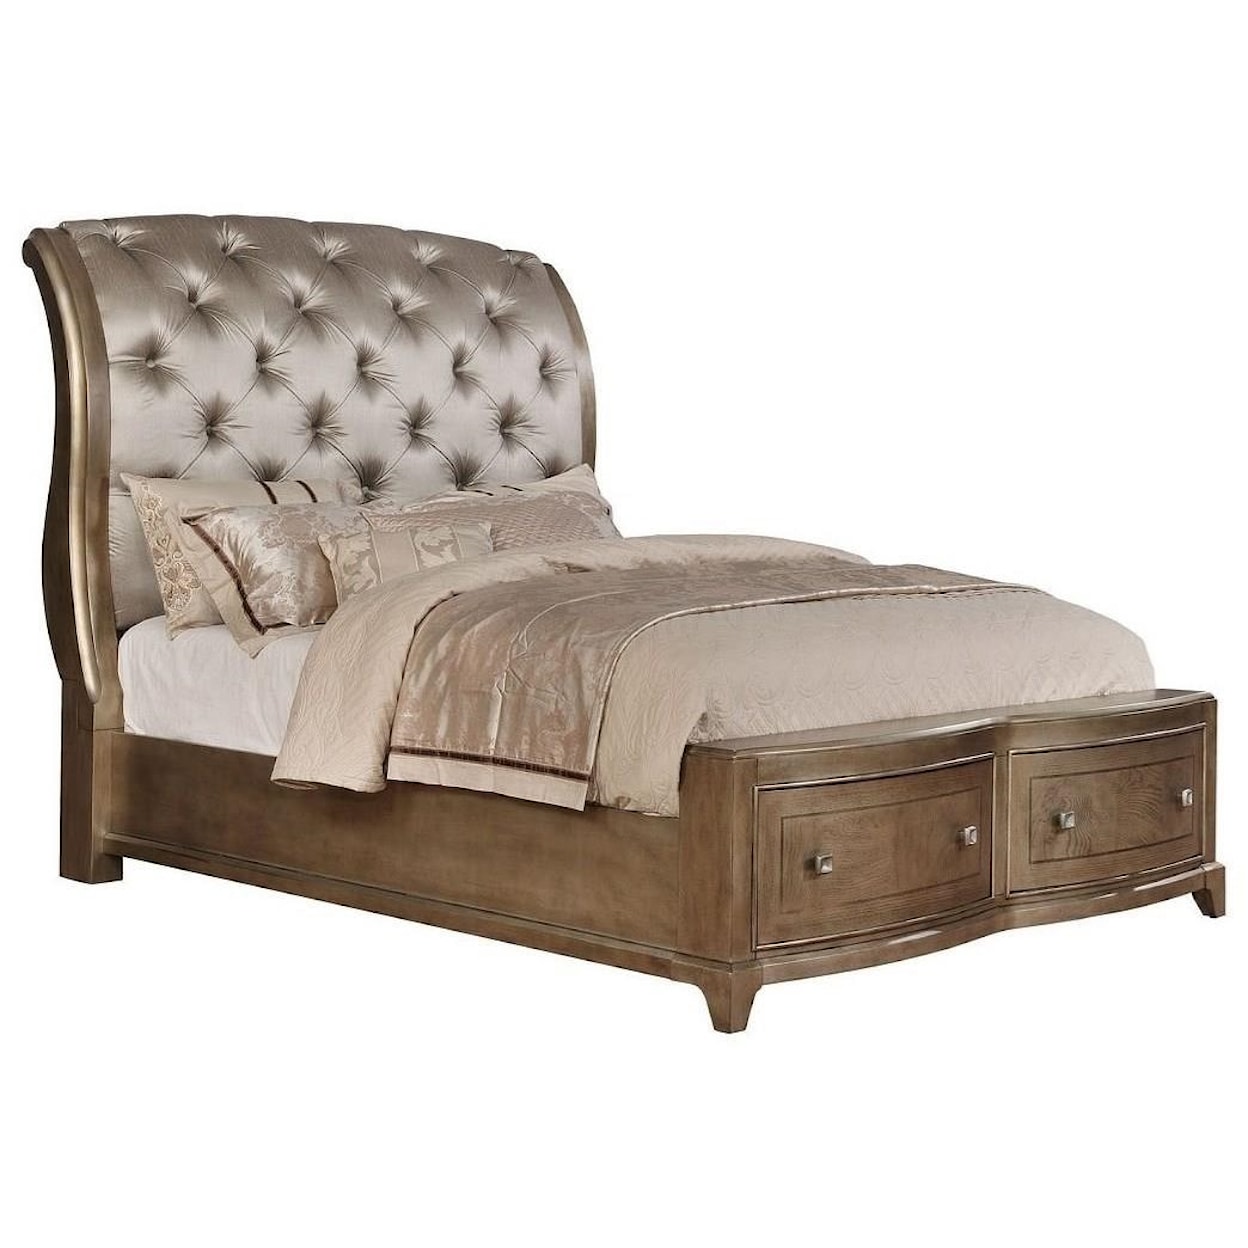 Avalon Furniture Uptown King Storage Bed